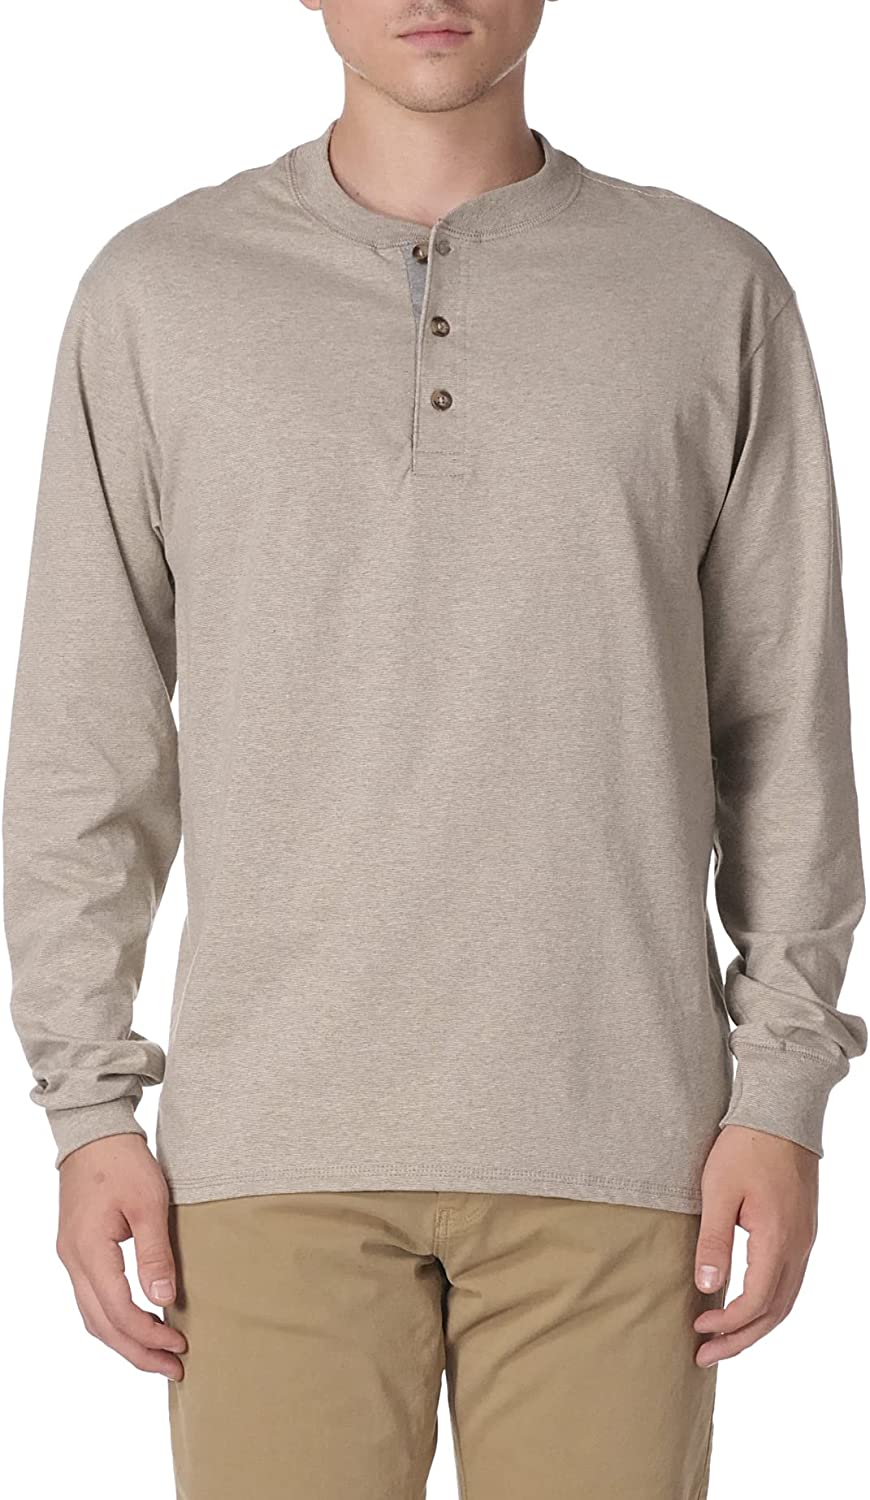 Hanes Men's Hanes Originals Cotton Long Sleeve Henley T-shirt